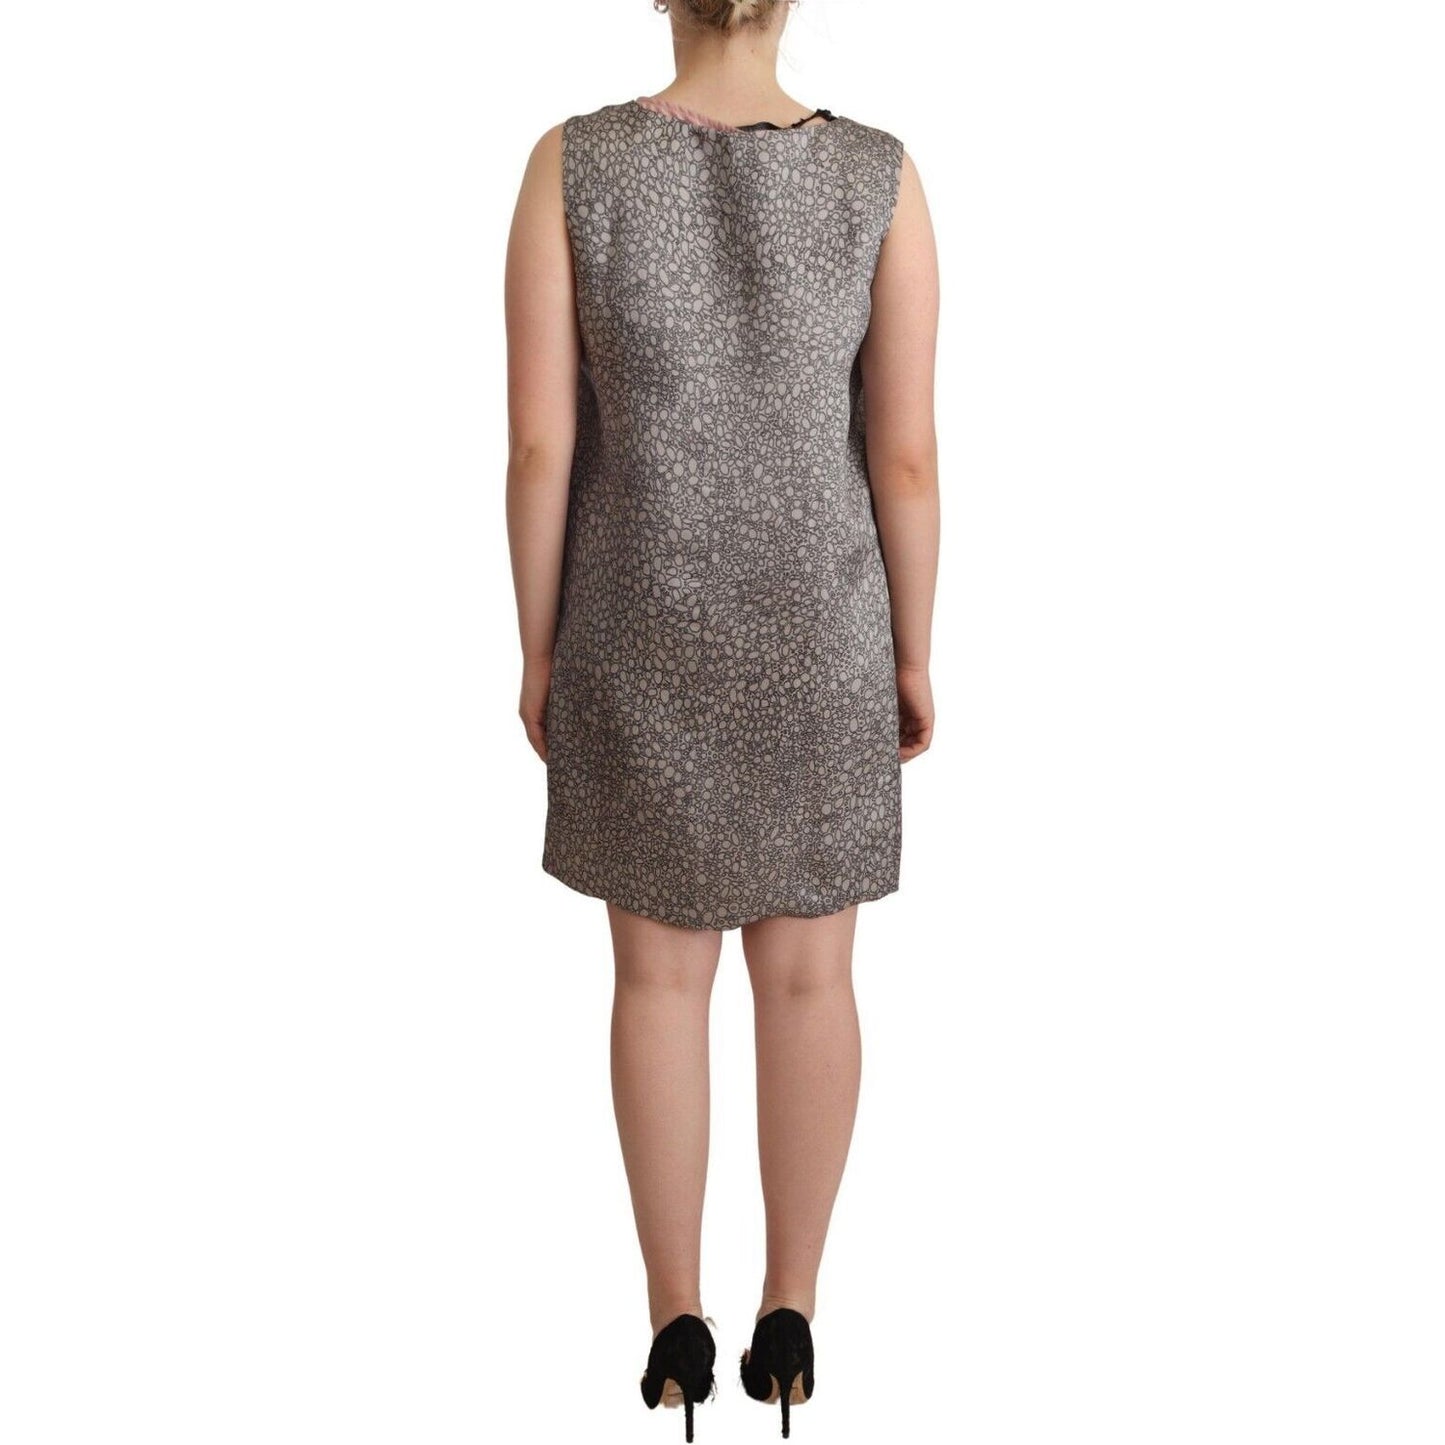 Comeforbreakfast Elegant Silk Shift Dress in Sophisticated Gray gray-sleeveless-shift-knee-length-dress WOMAN DRESSES s-l1600-2-89-d687874a-232.jpg